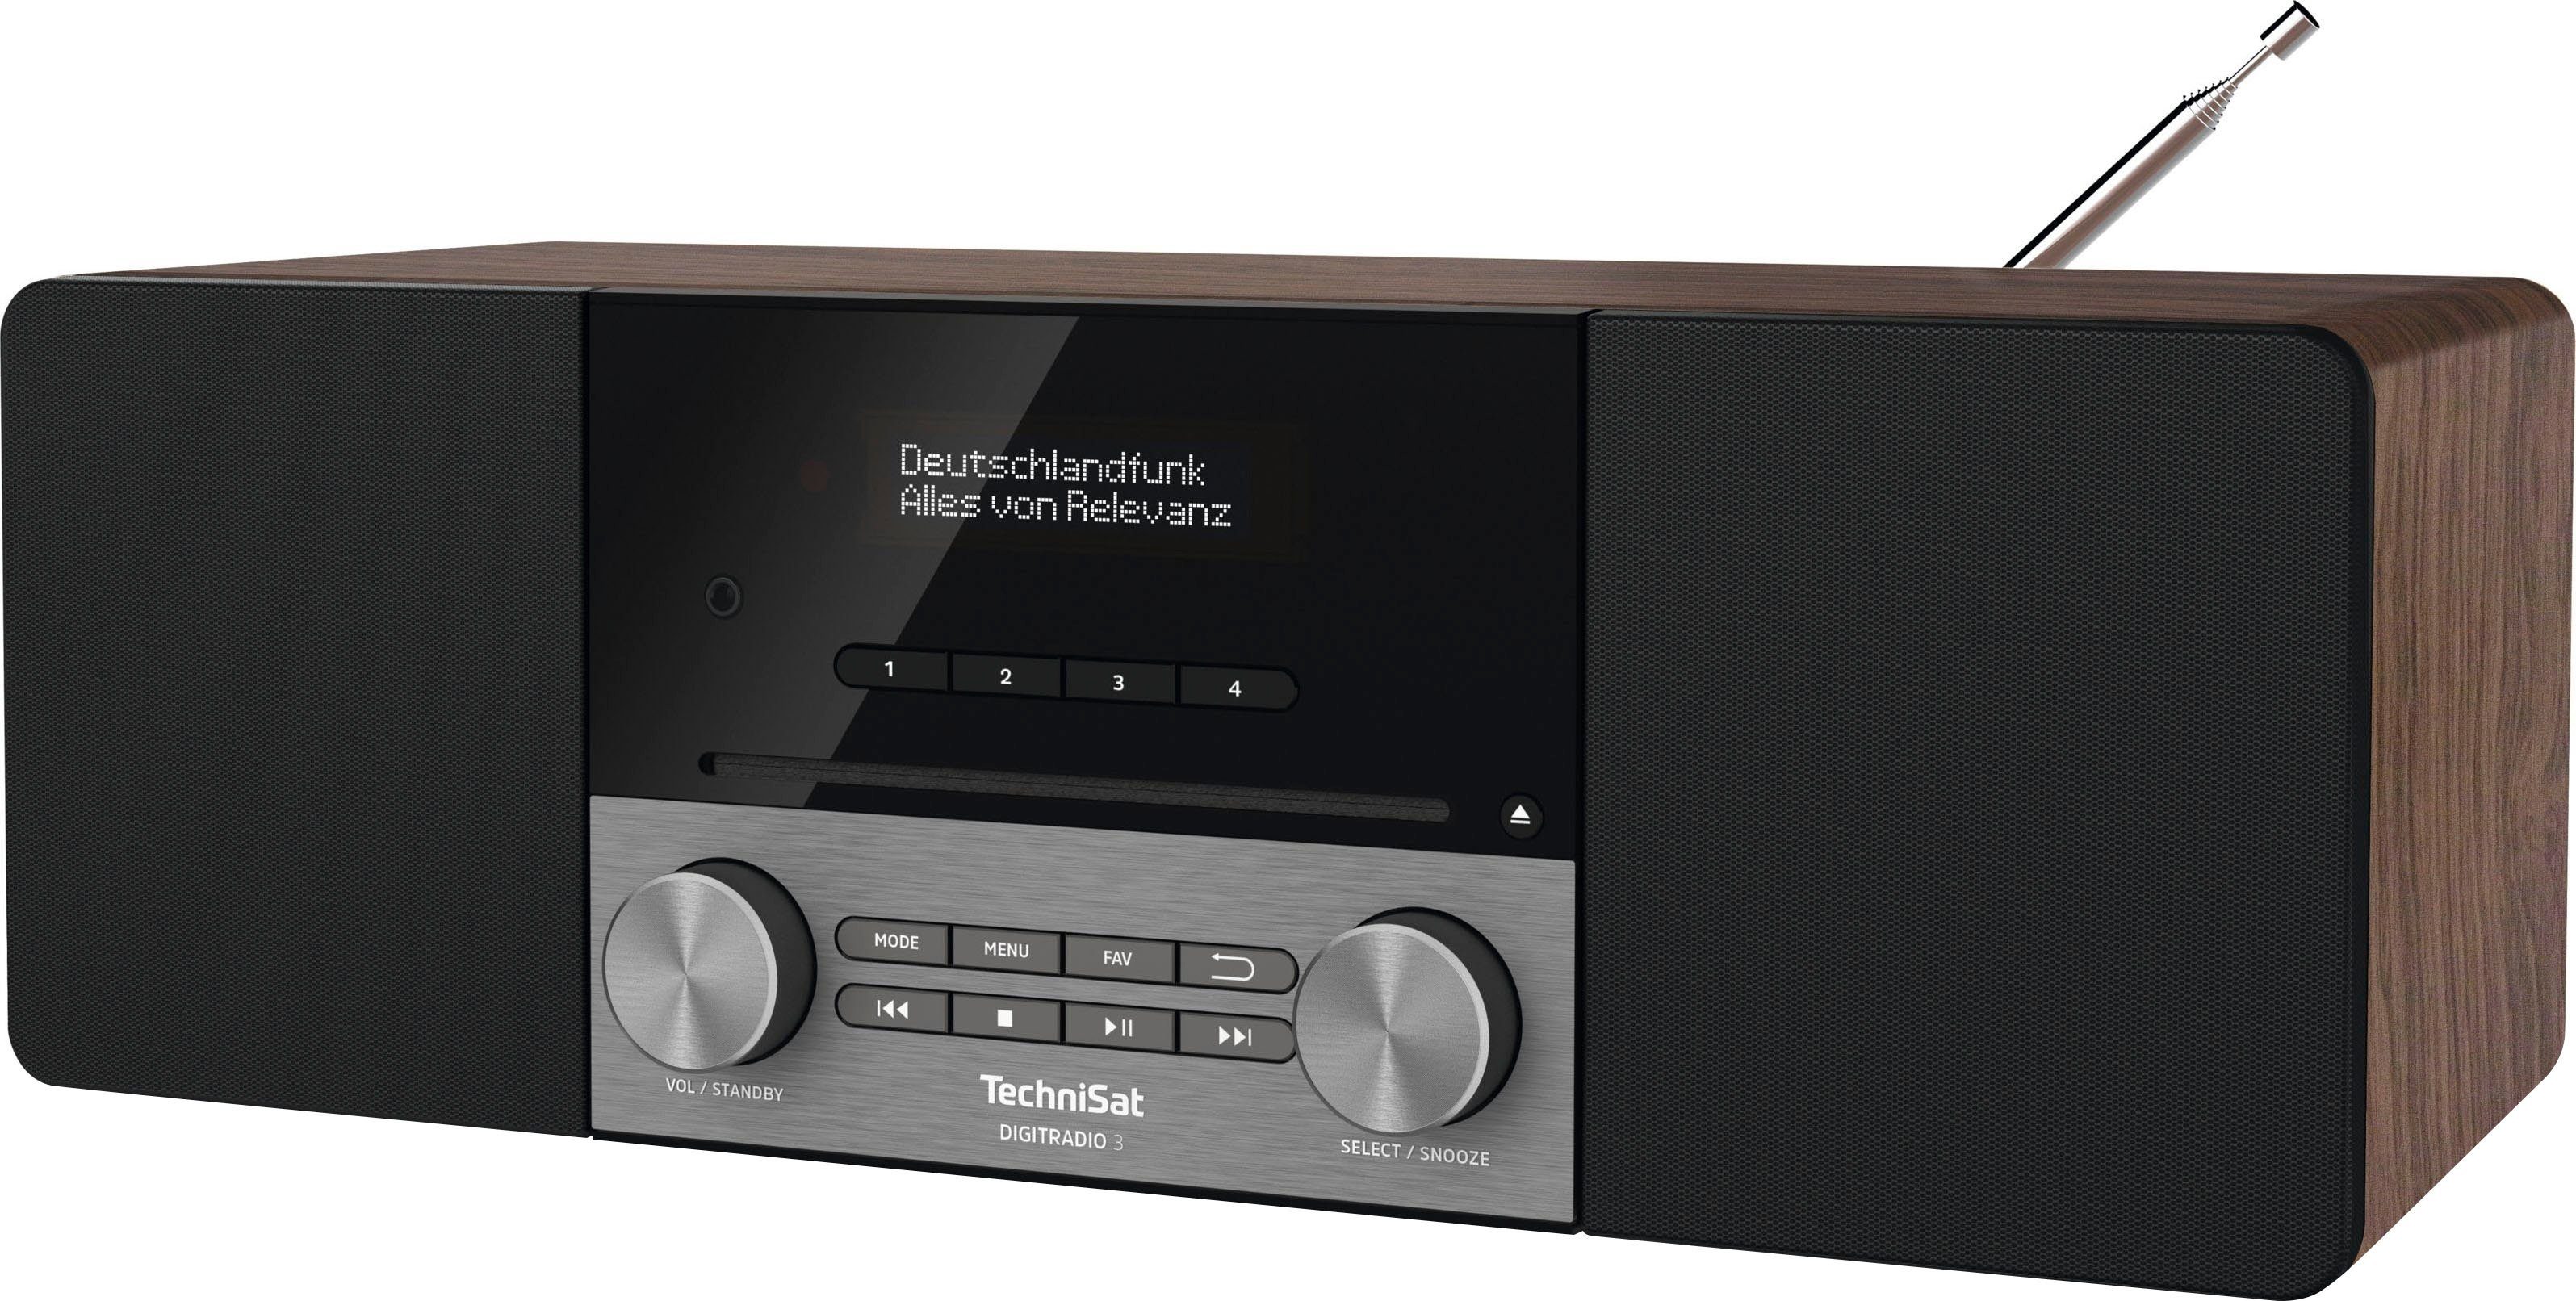 TechniSat DIGITRADIO 3 Digitalradio Nussbaum 20 (DAB) Made (Digitalradio RDS, UKW CD-Player, mit in W, Germany) (DAB)